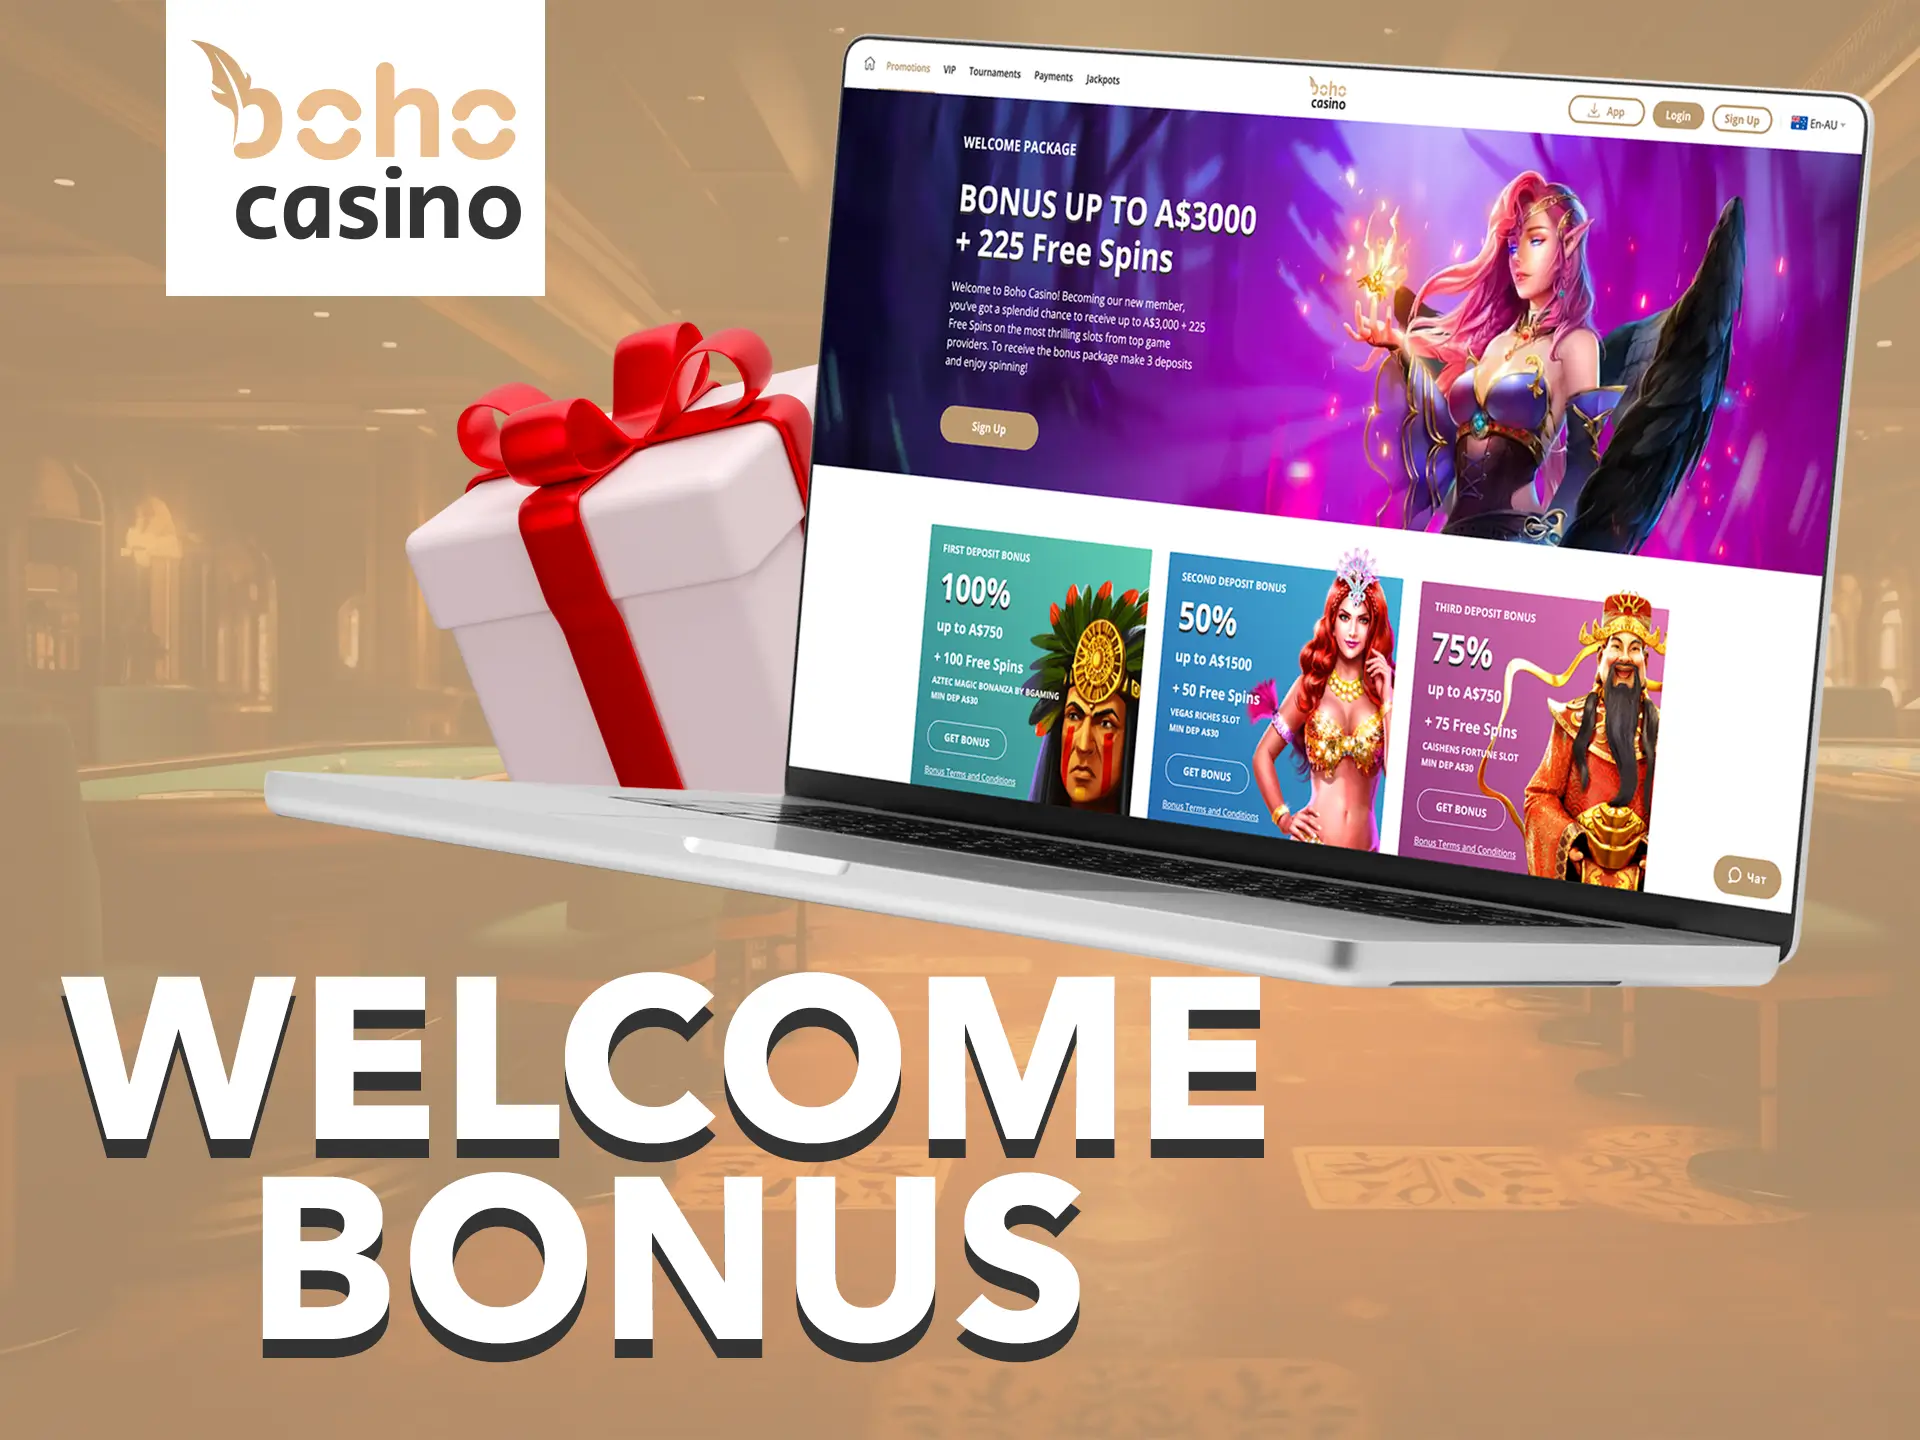 Use the welcome bonus to maximise your winnings at Boho Casino.